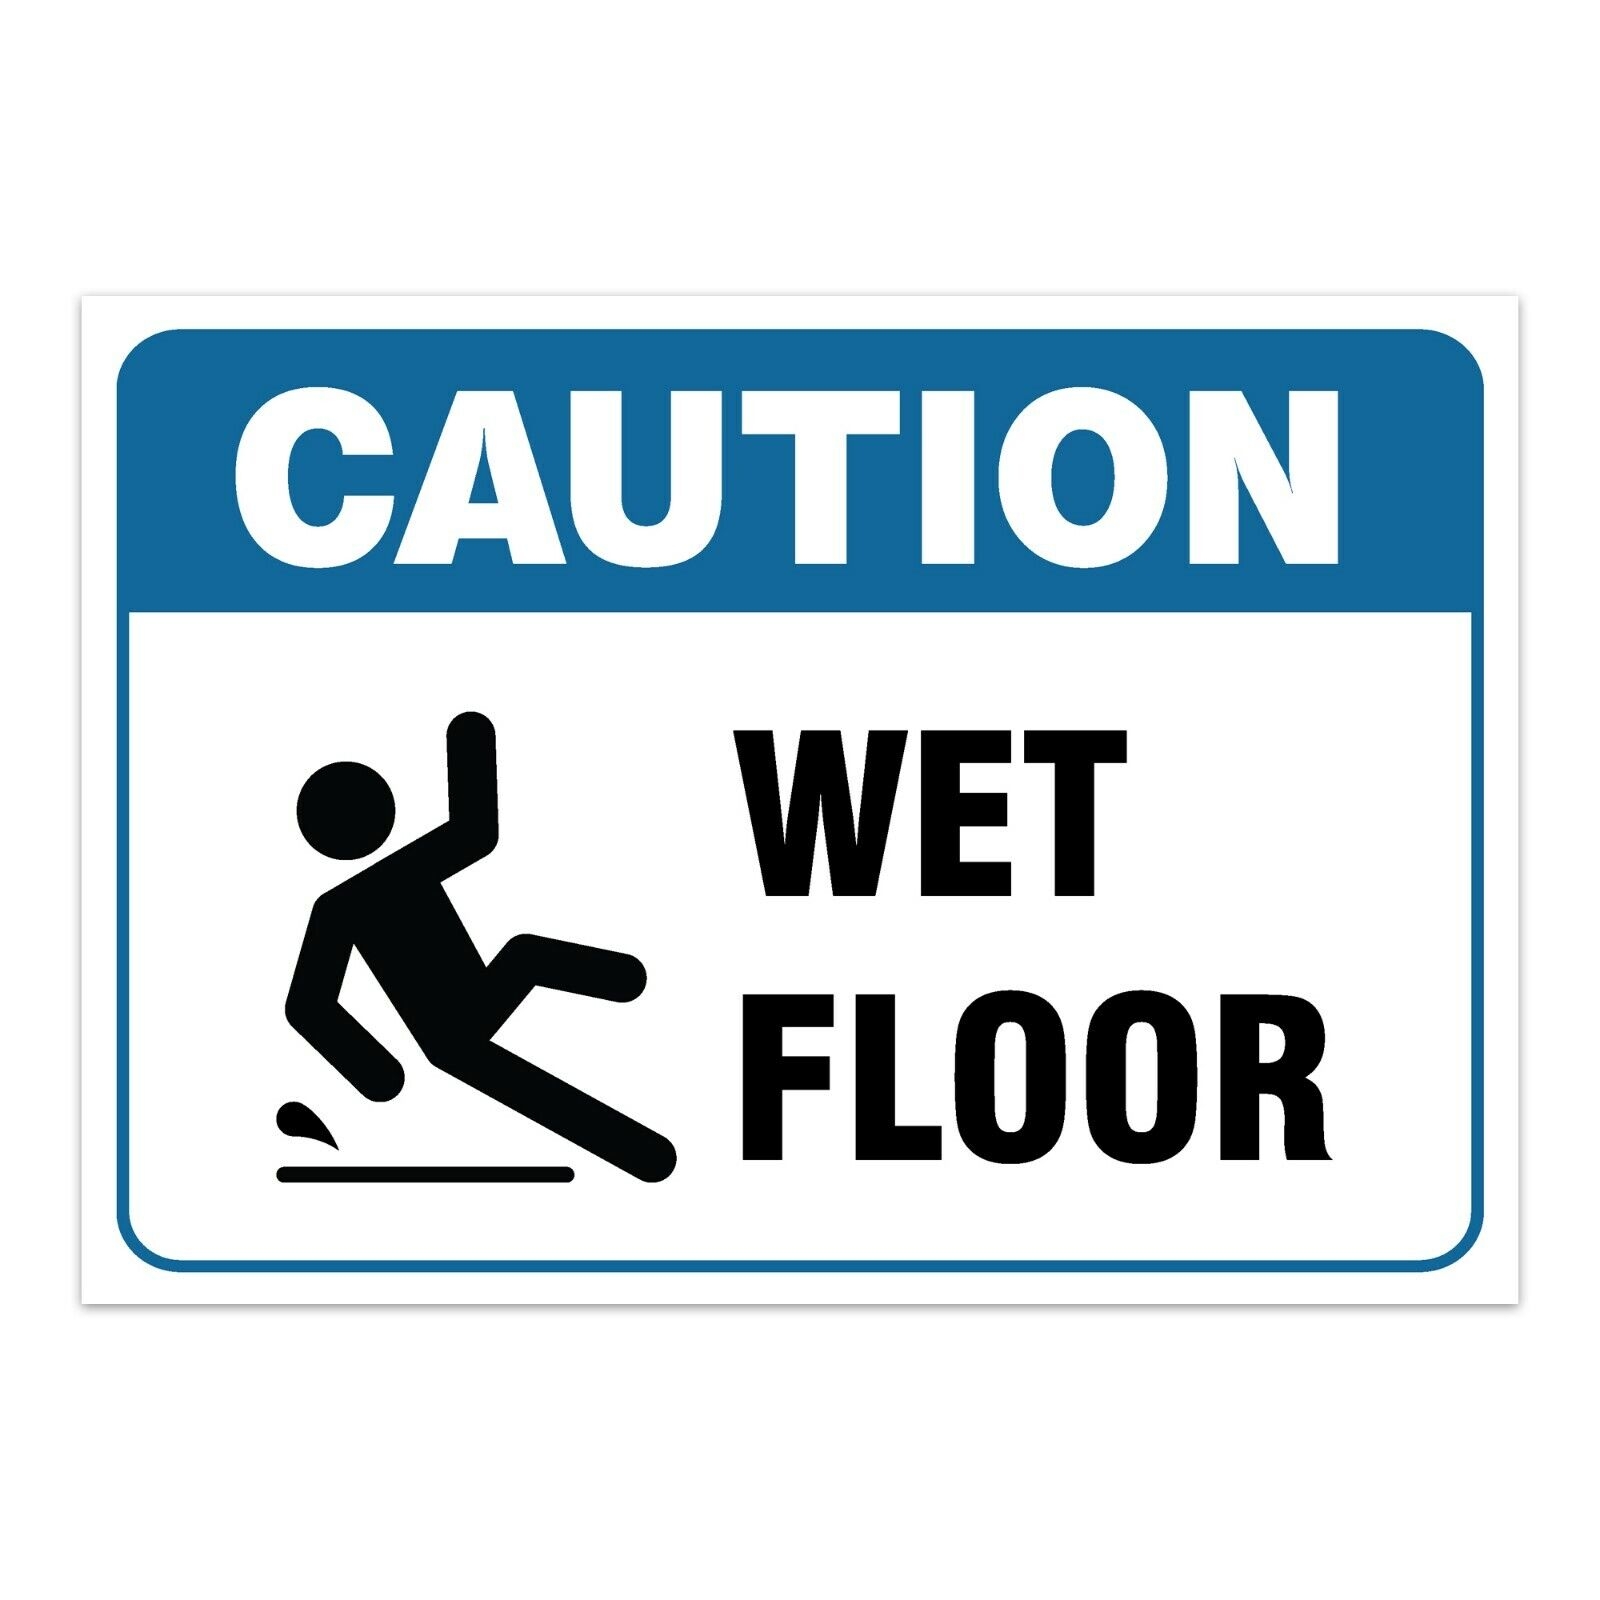 CAUTION Wet Floor Slippery Vinyl Decal Window Wall Sticker Safety Sign Blue EBay